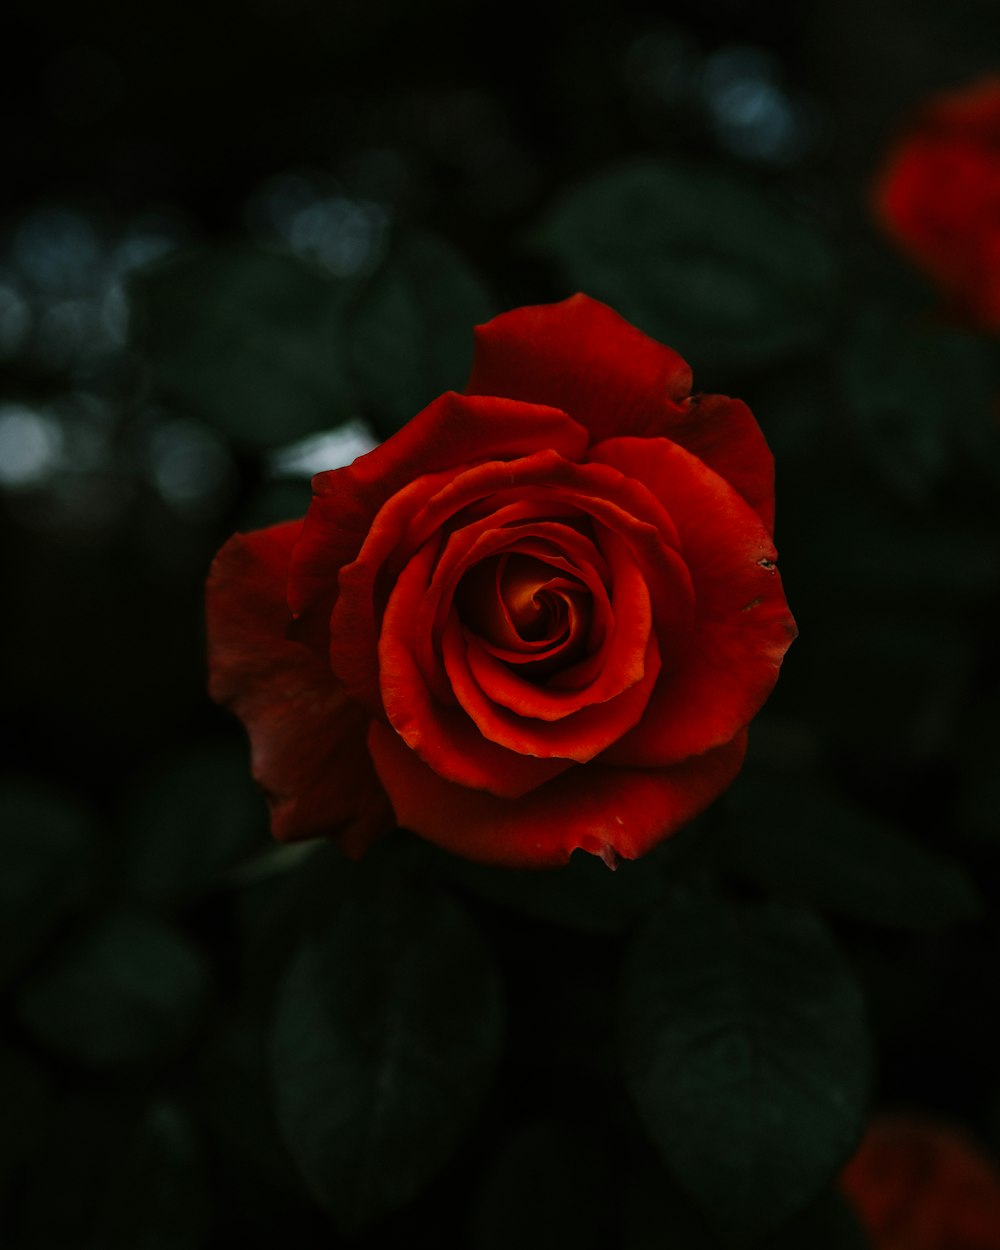 red rose flower